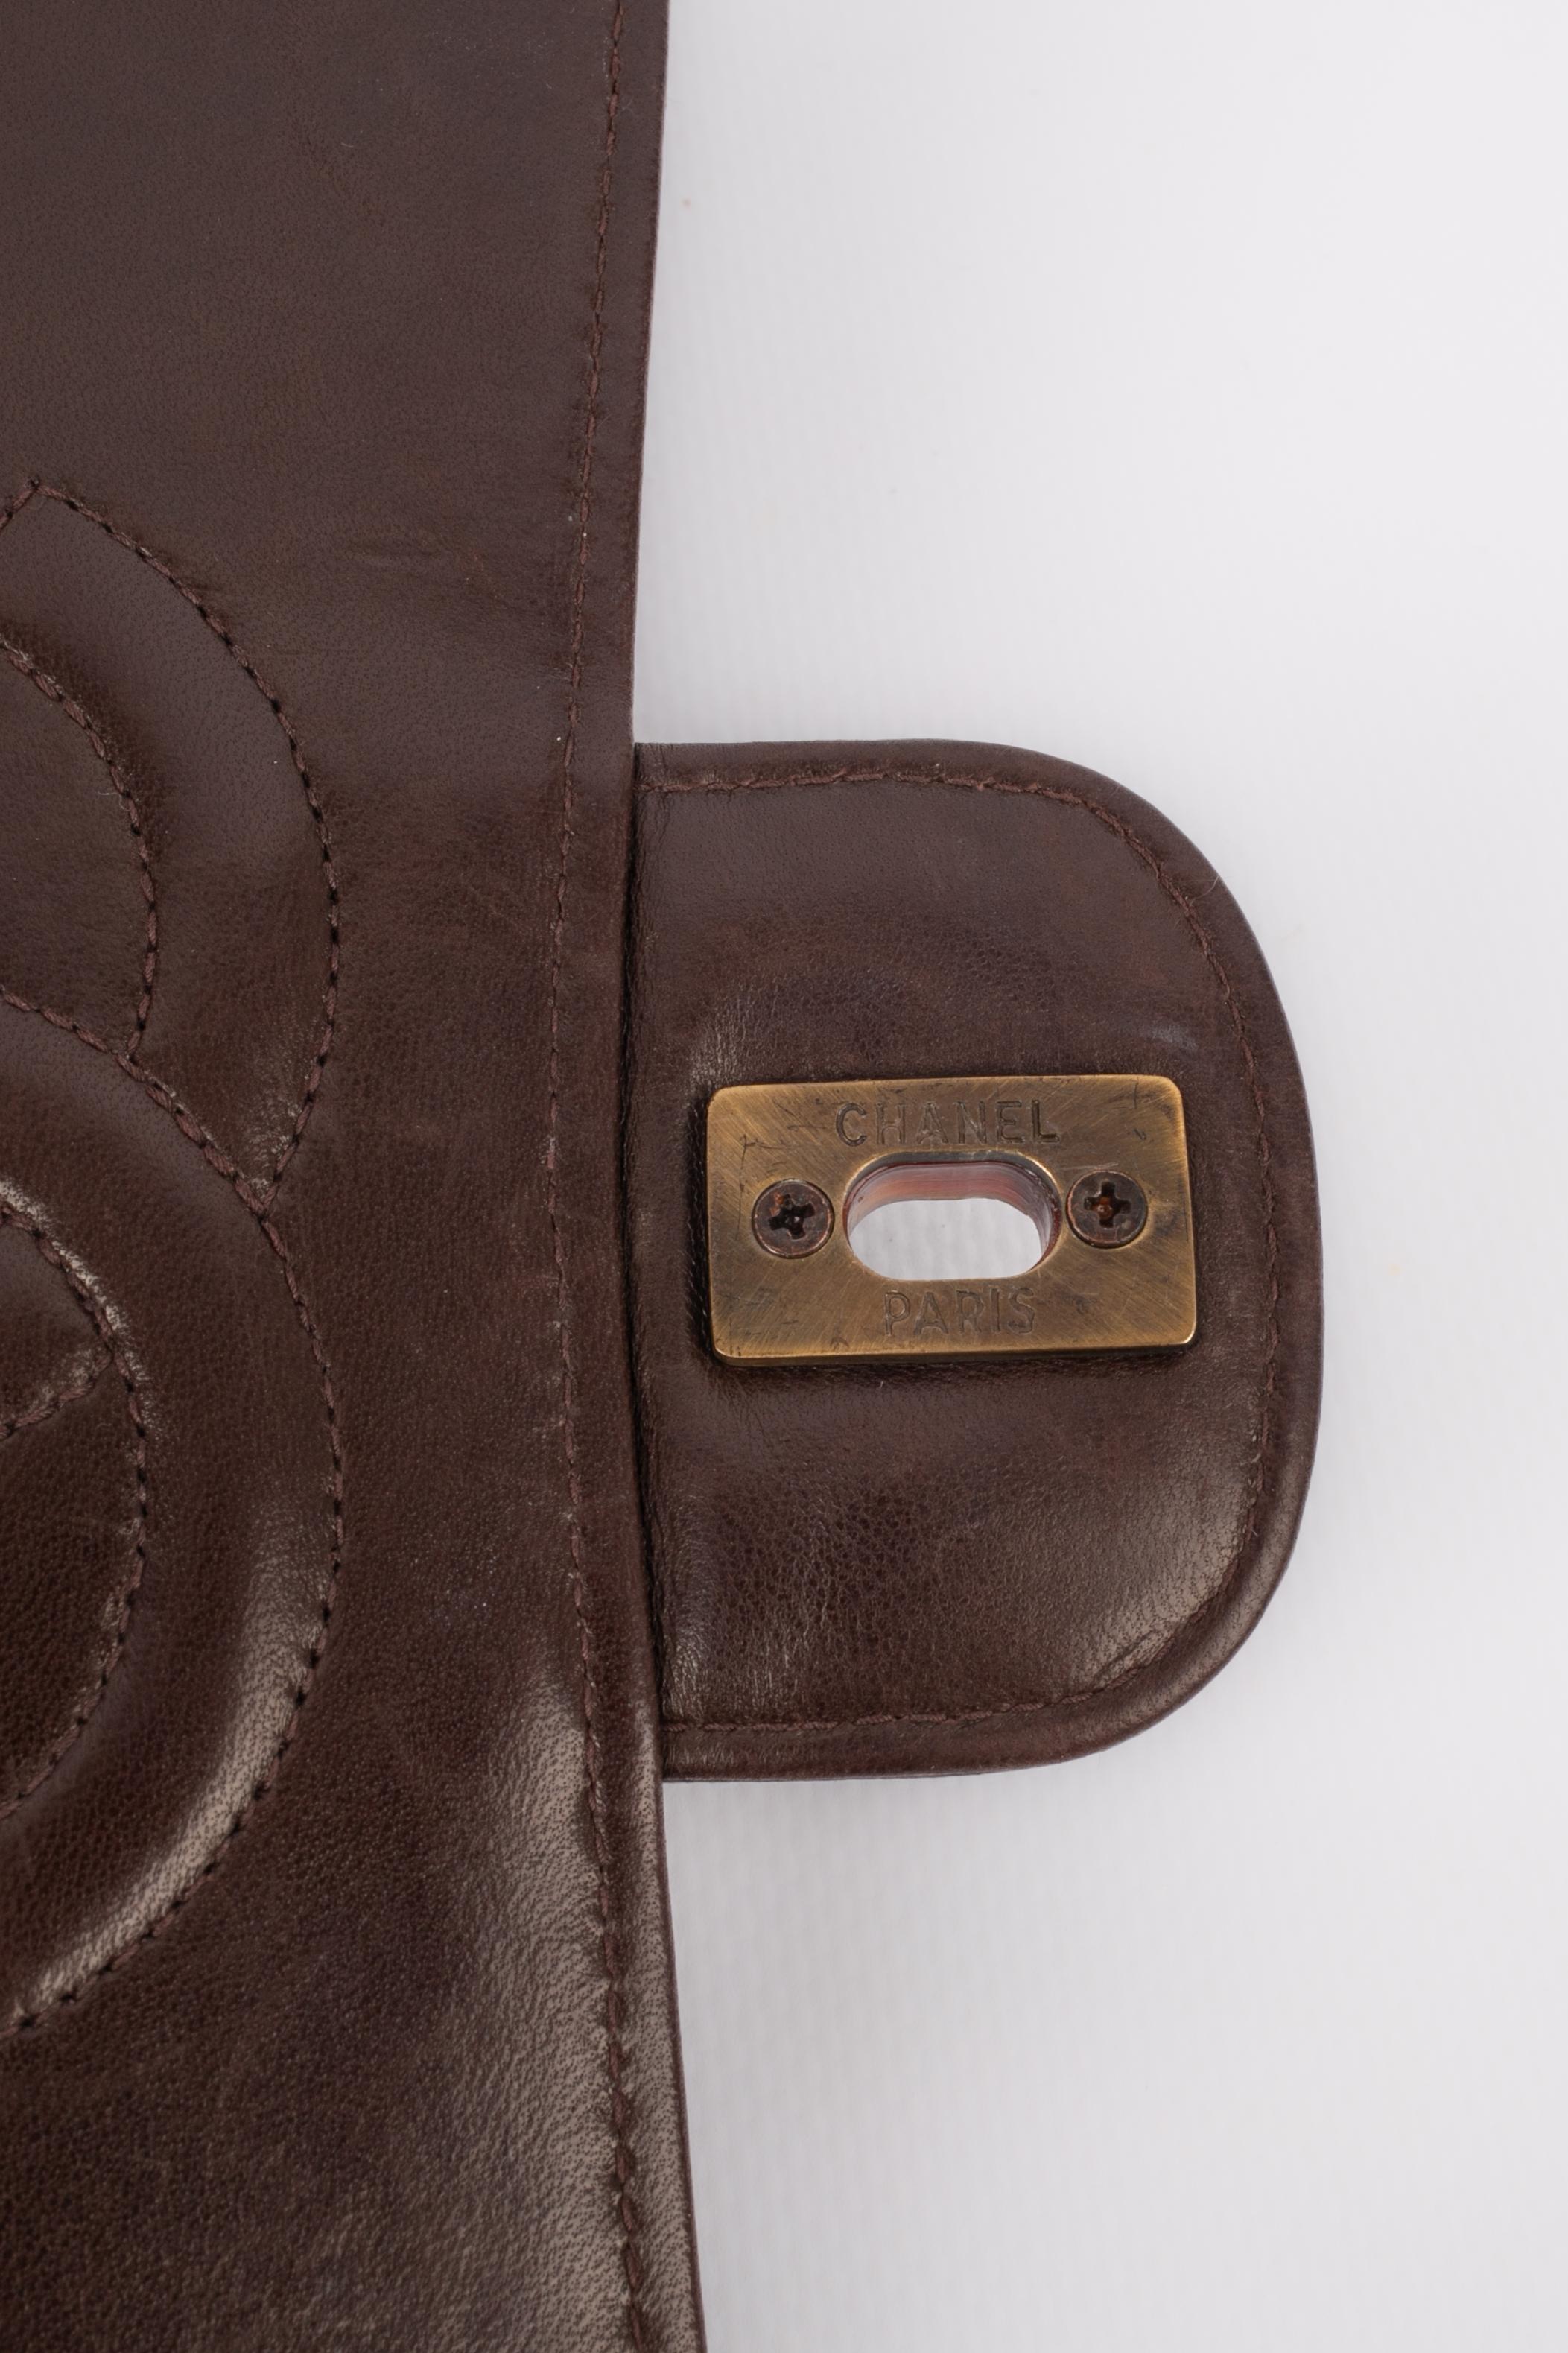 Chanel leather and bakelite bag 6